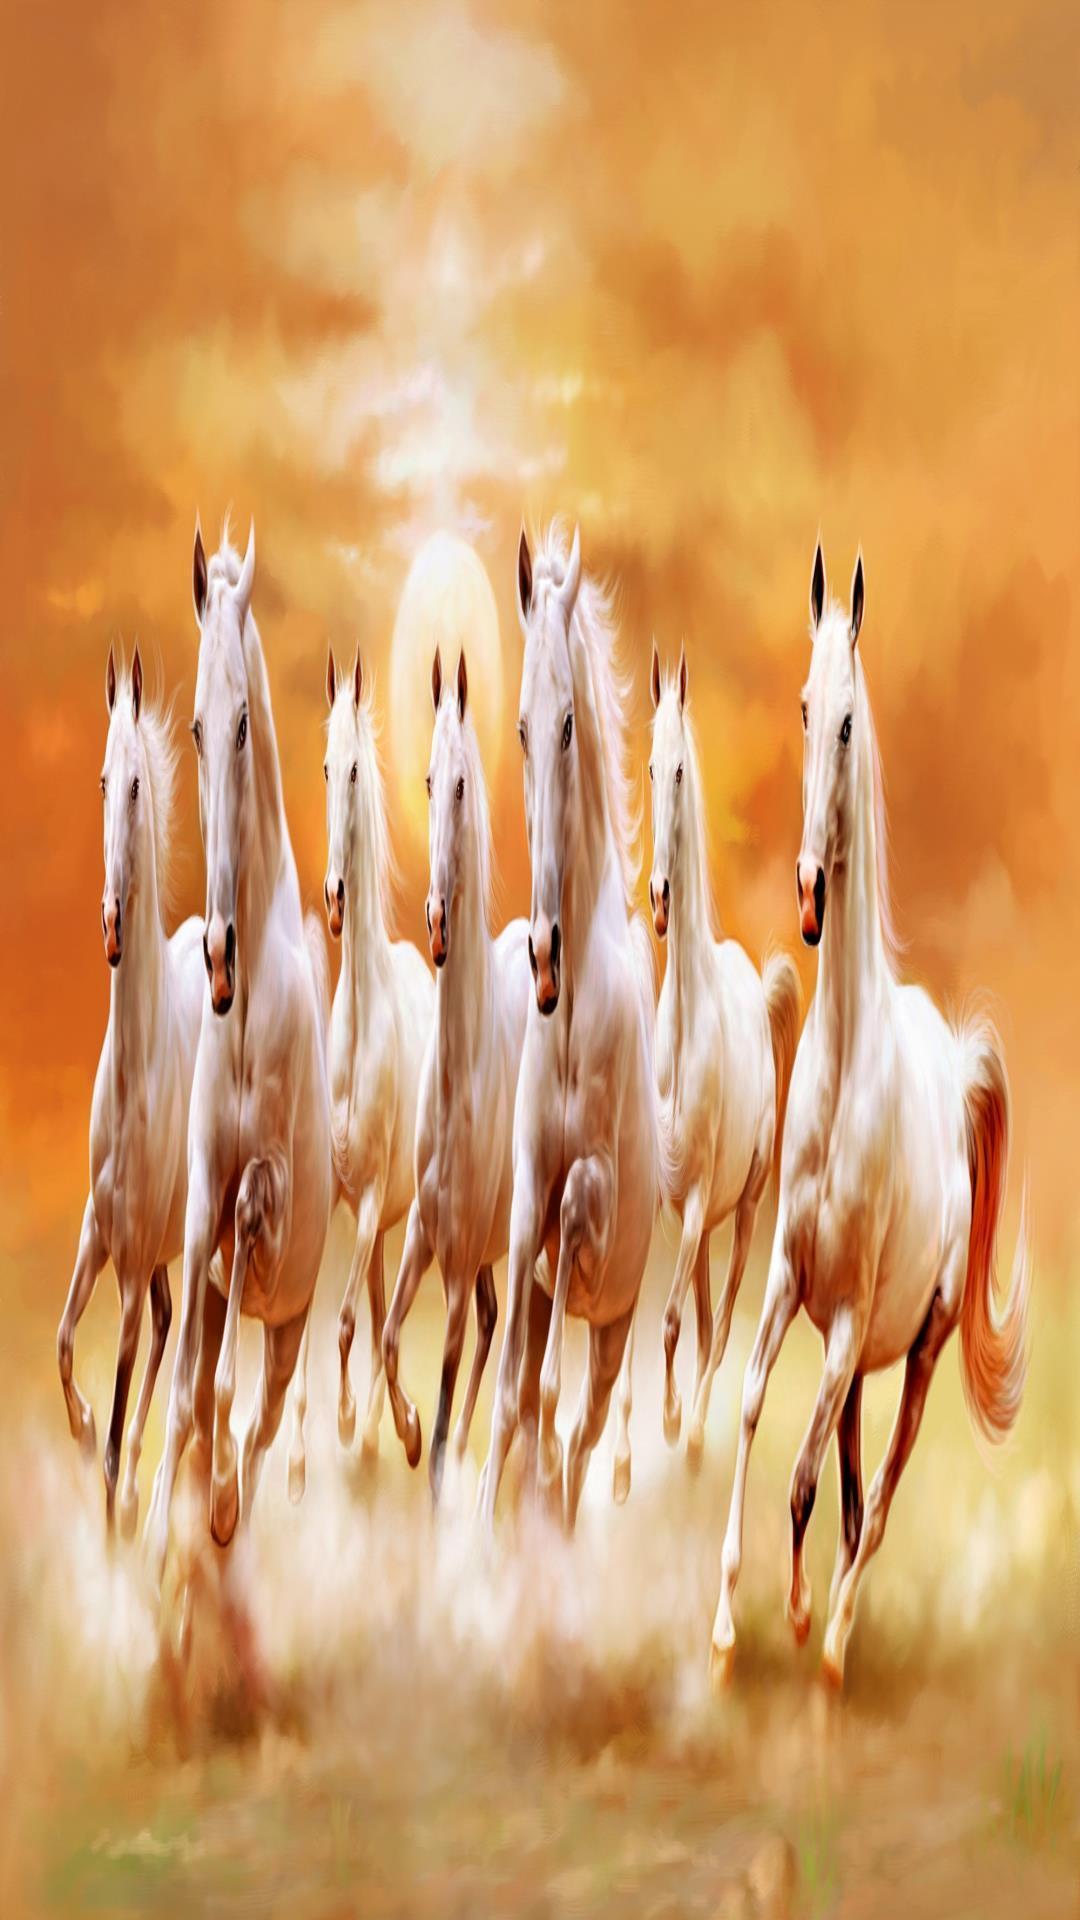 Seven Horses Wallpapers - Top Free Seven Horses Backgrounds